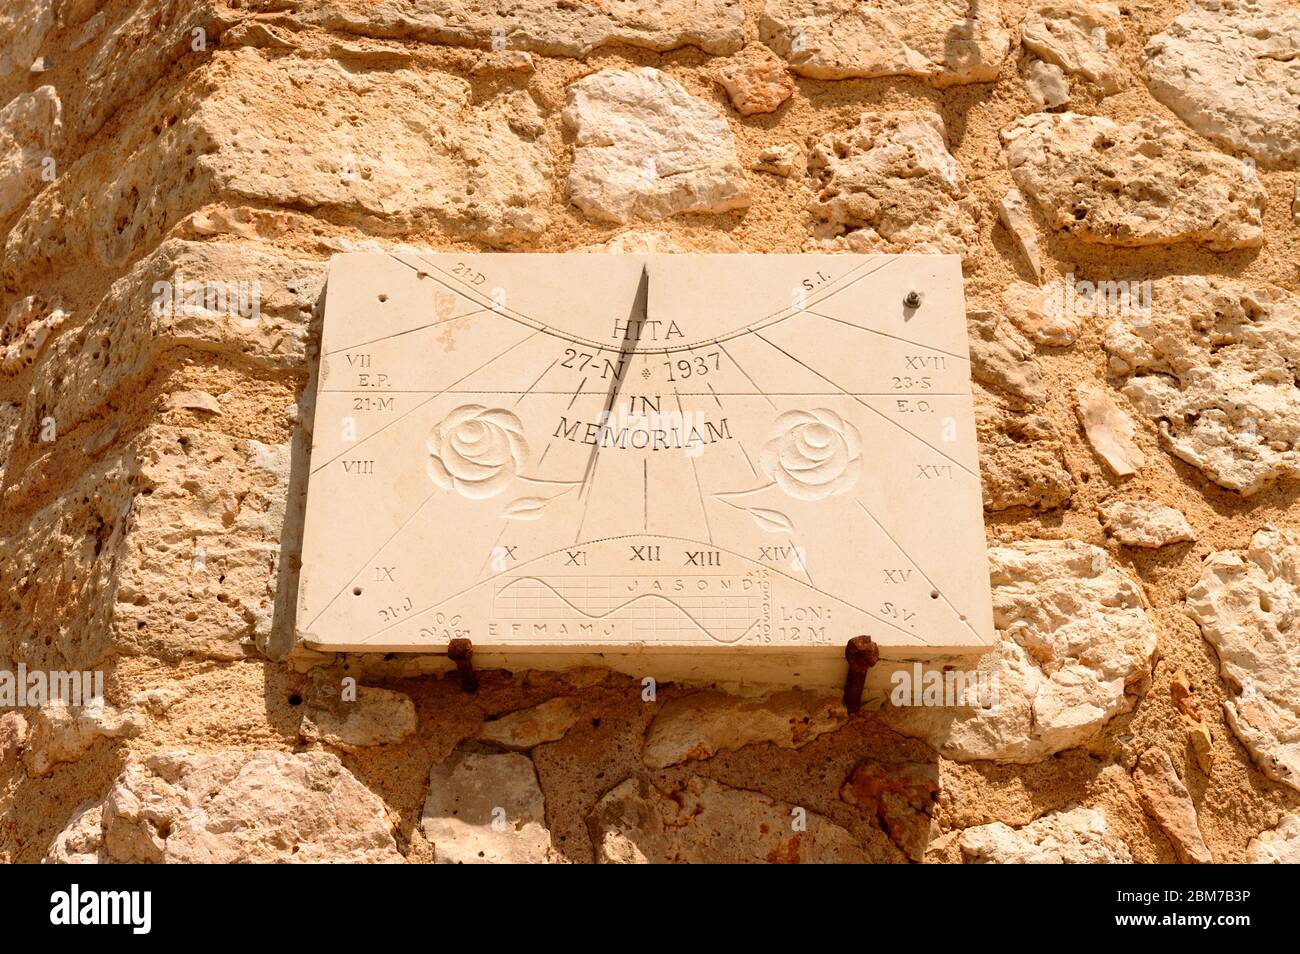 Precious Sundial Sculpted On The Wall In Memory Of The Archpriest Of Hita. July 23, 2019. Hita Guadalajara Castilla La Mancha. Spain. Travel Tourism H Stock Photo